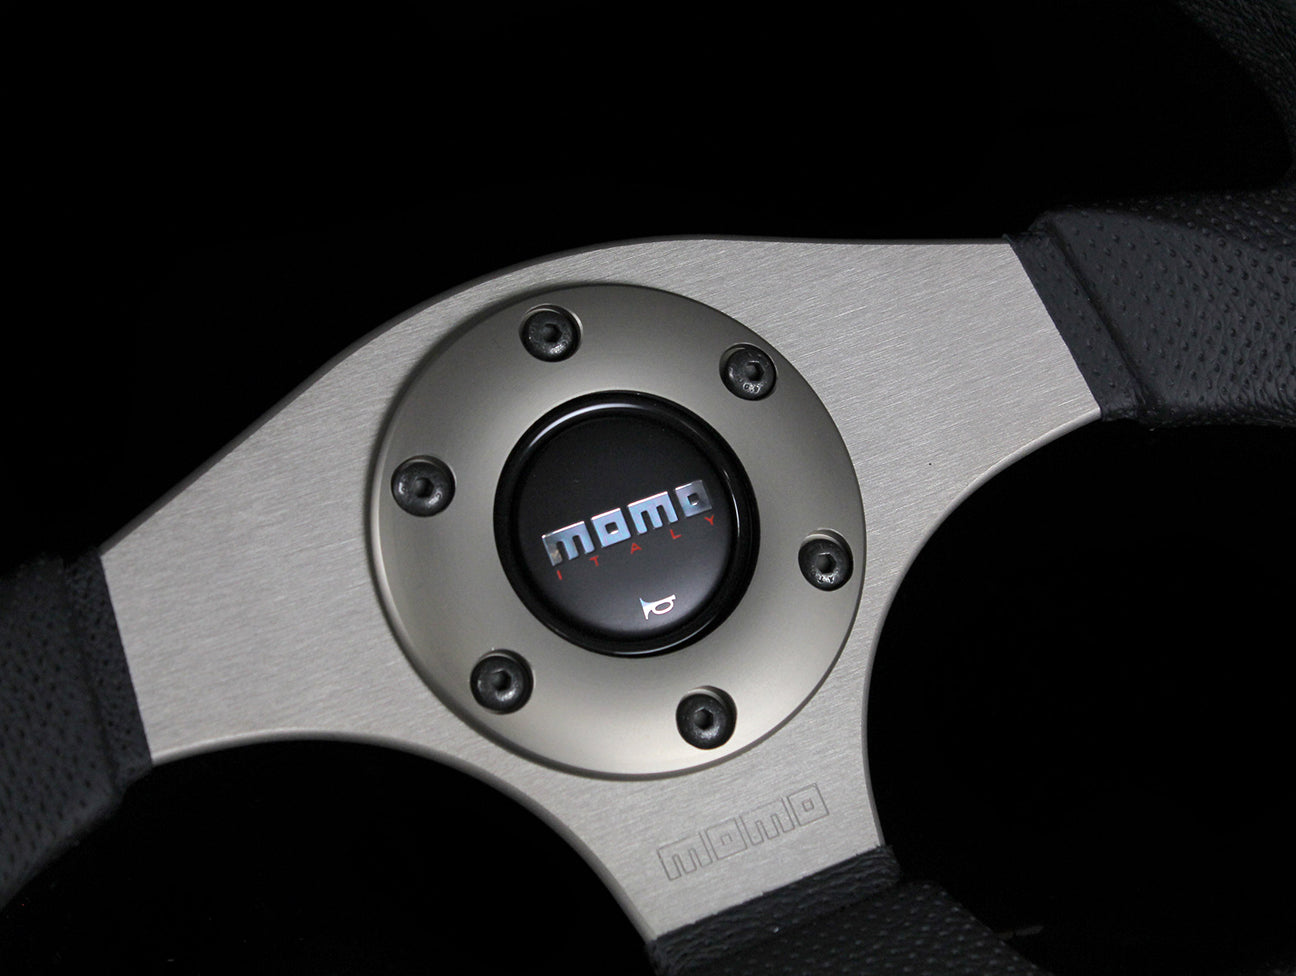 Momo Eagle 350mm Steering Wheel